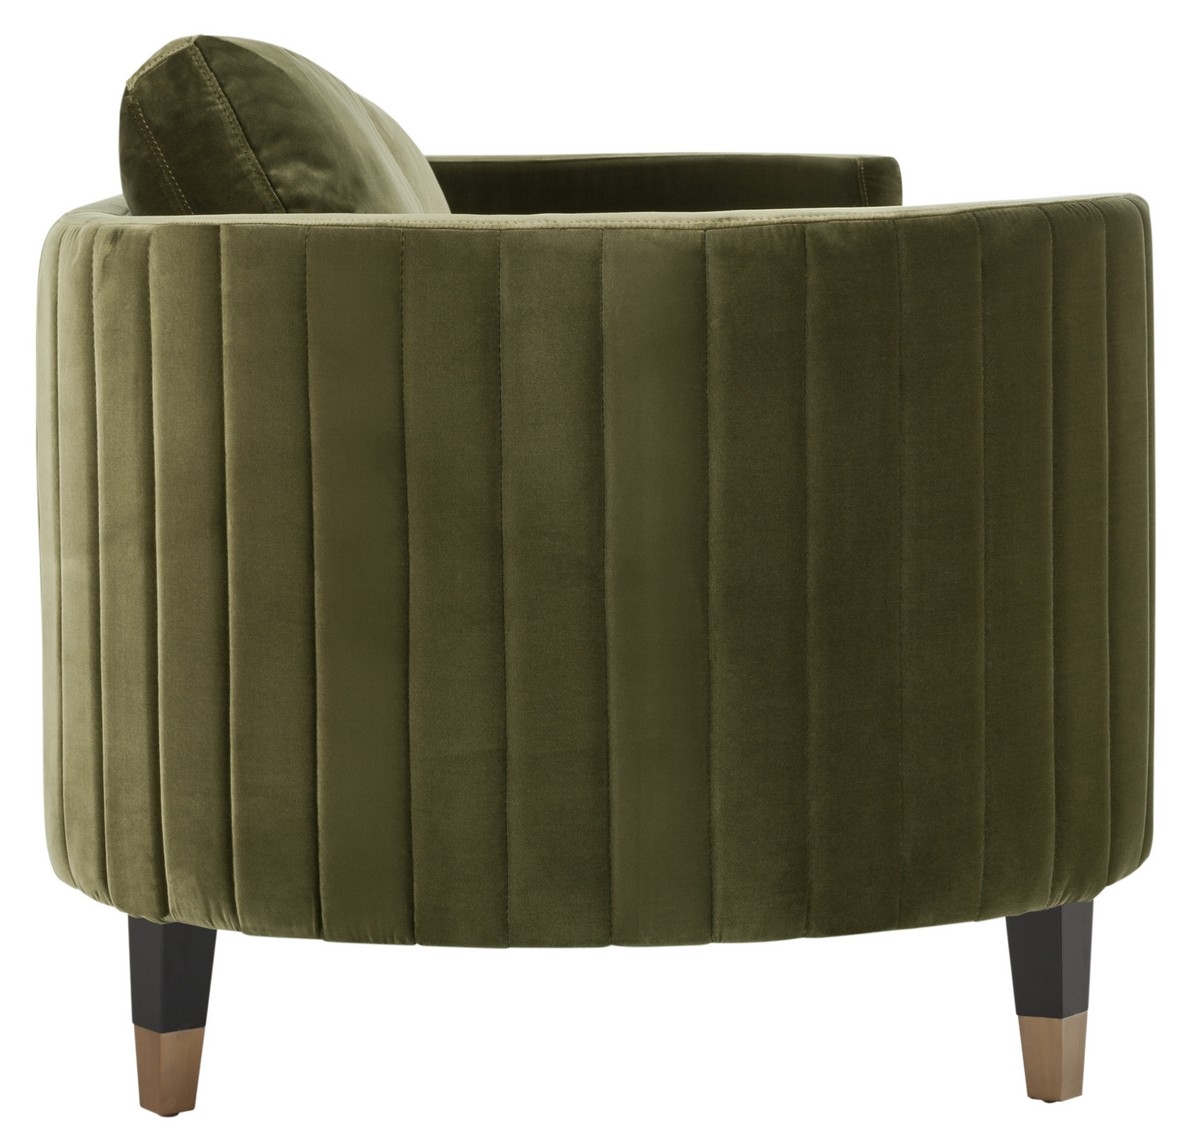 Winford Velvet Sofa - Giotto Dark Olive Green - Arlo Home - Image 4